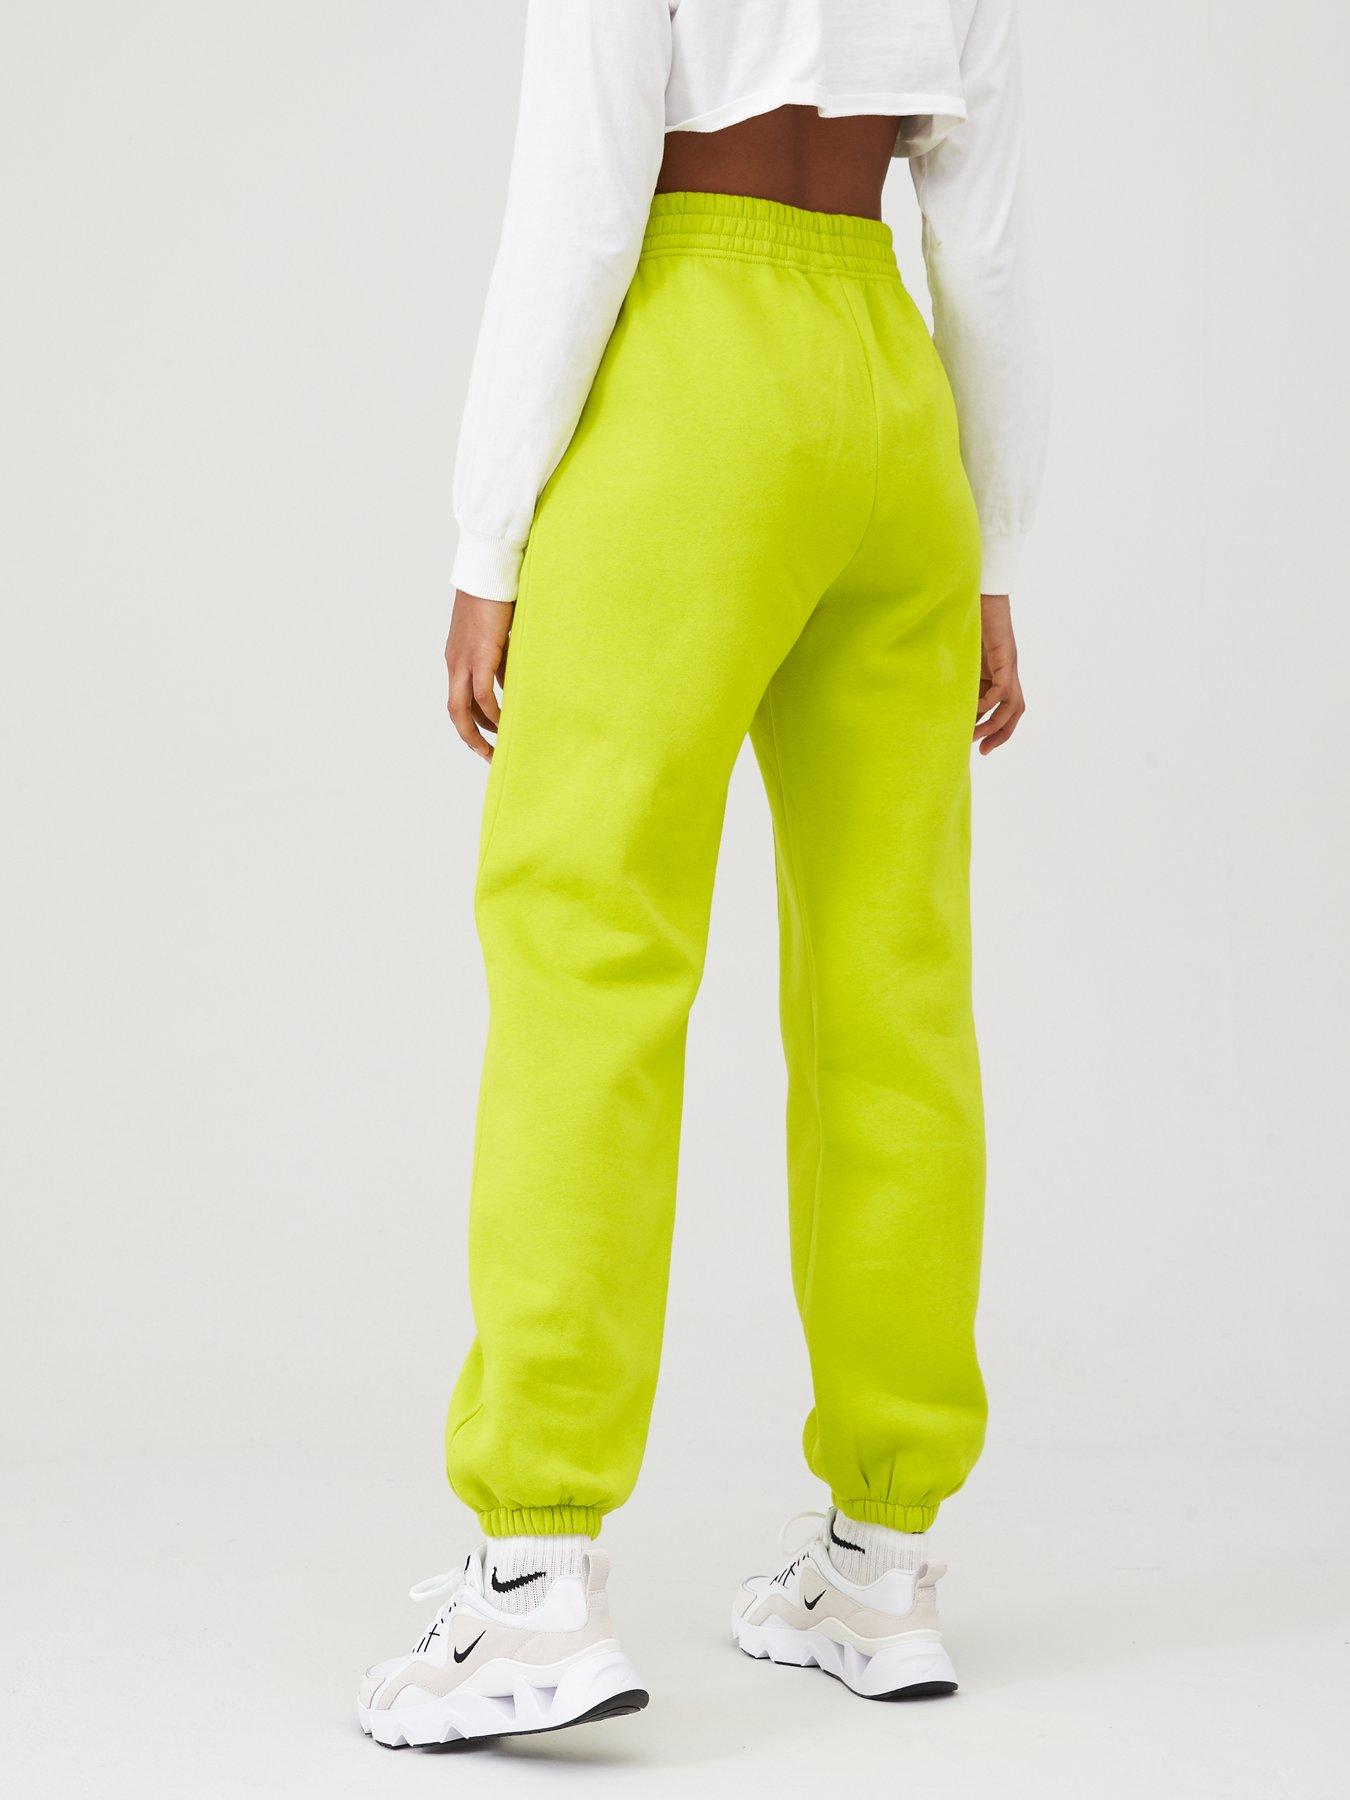 neon green nike pants